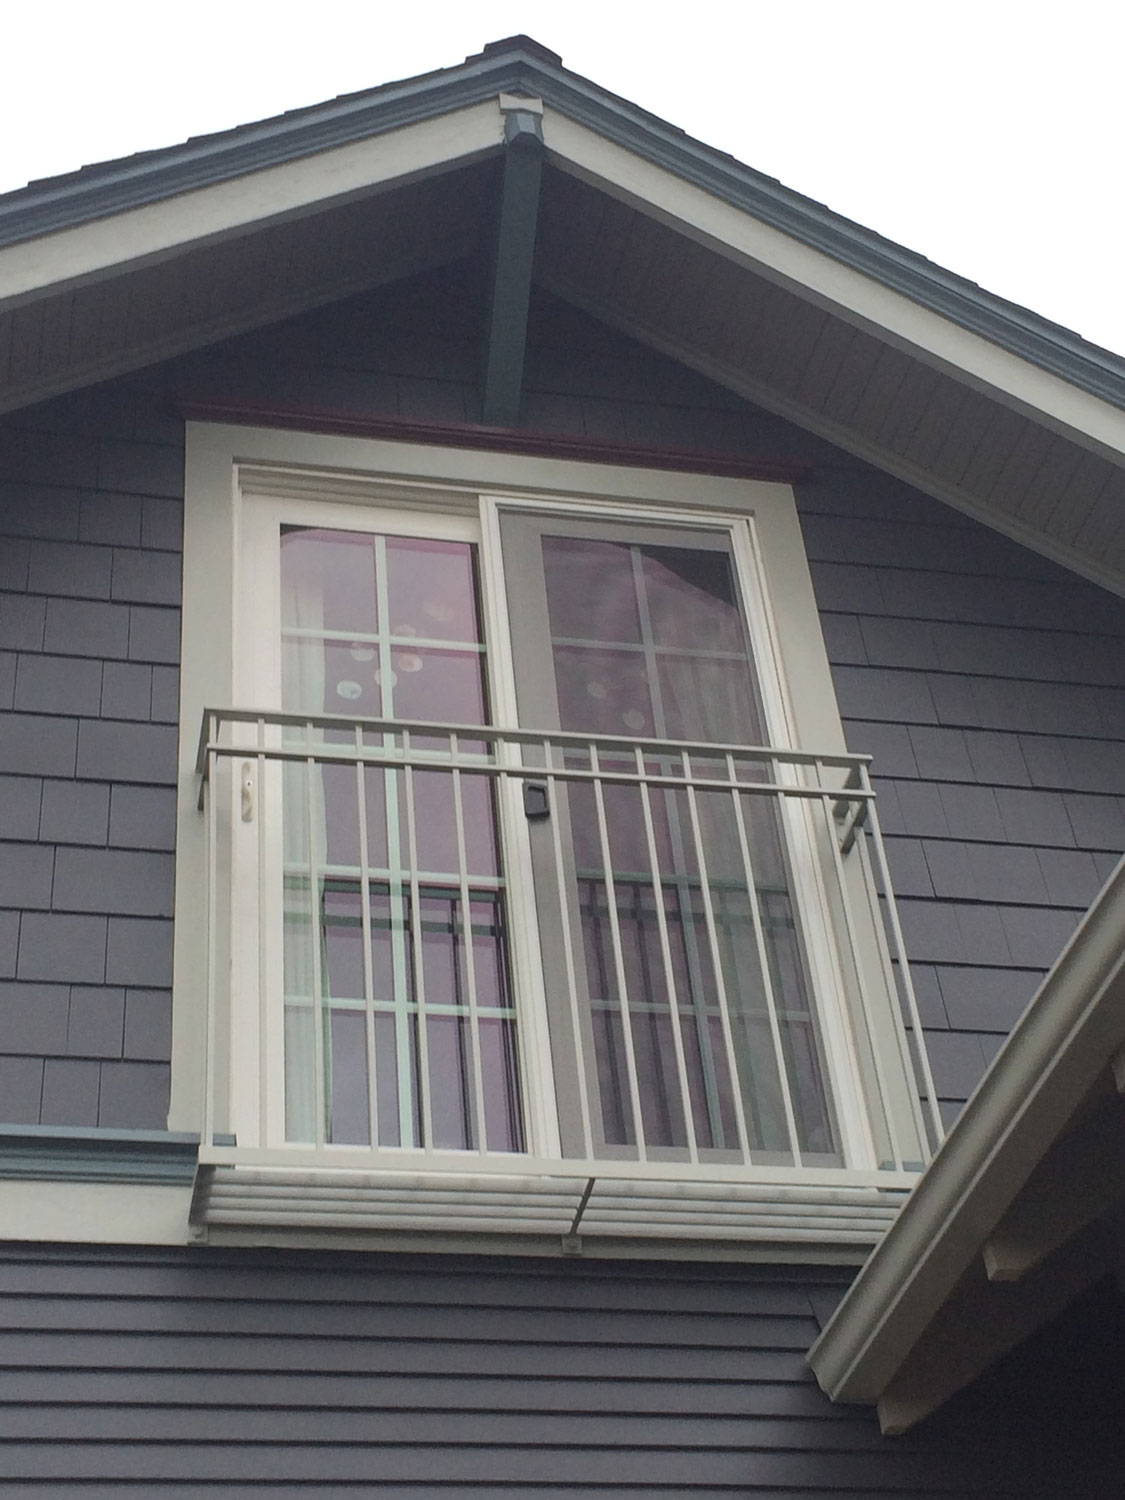 Iron Balcony Guardrail for Second Story Window - Seattle, WA